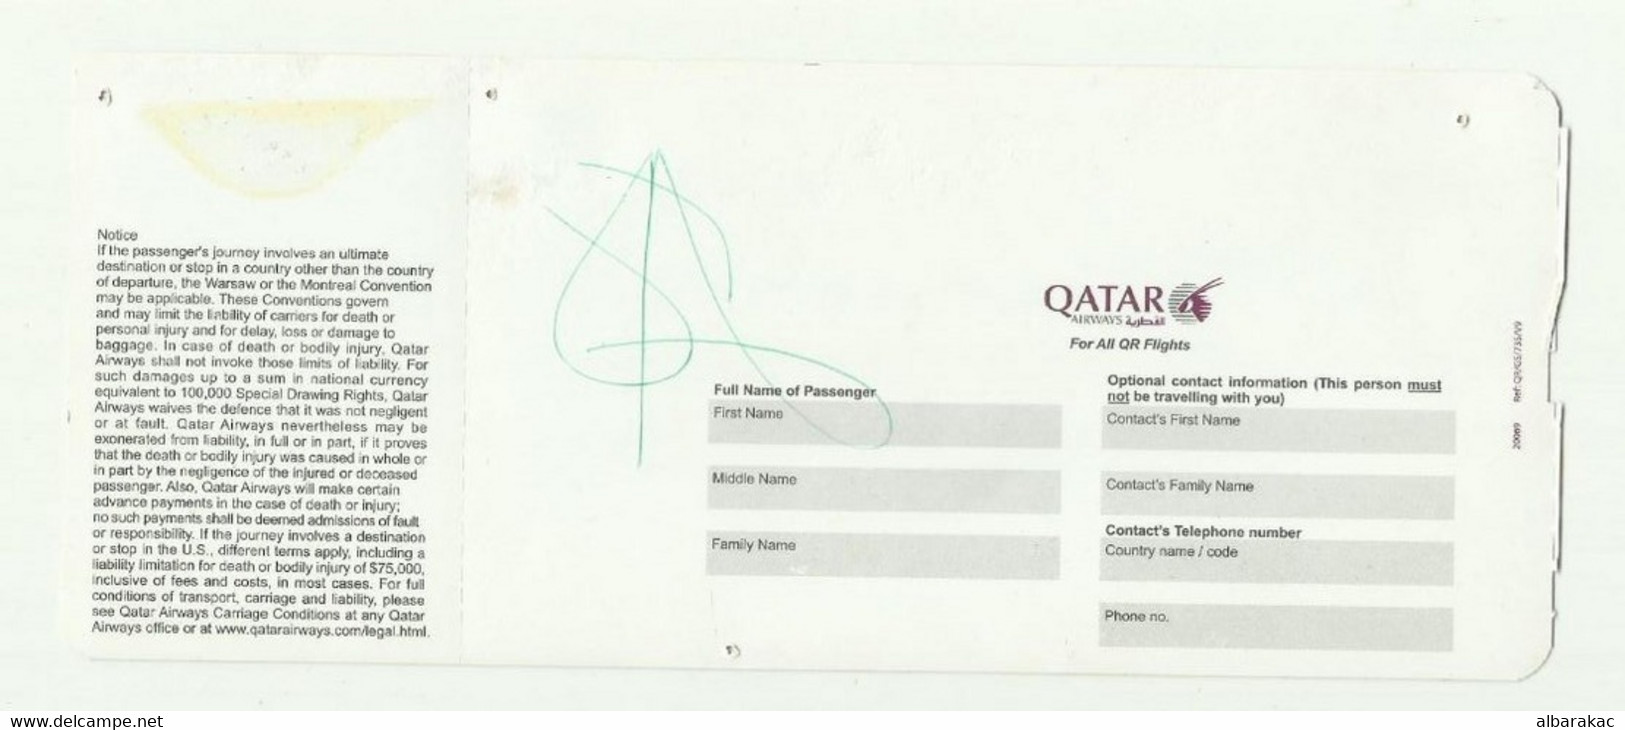 Qatar Airways Boarding Pass - Doha To Sydney - Mundo